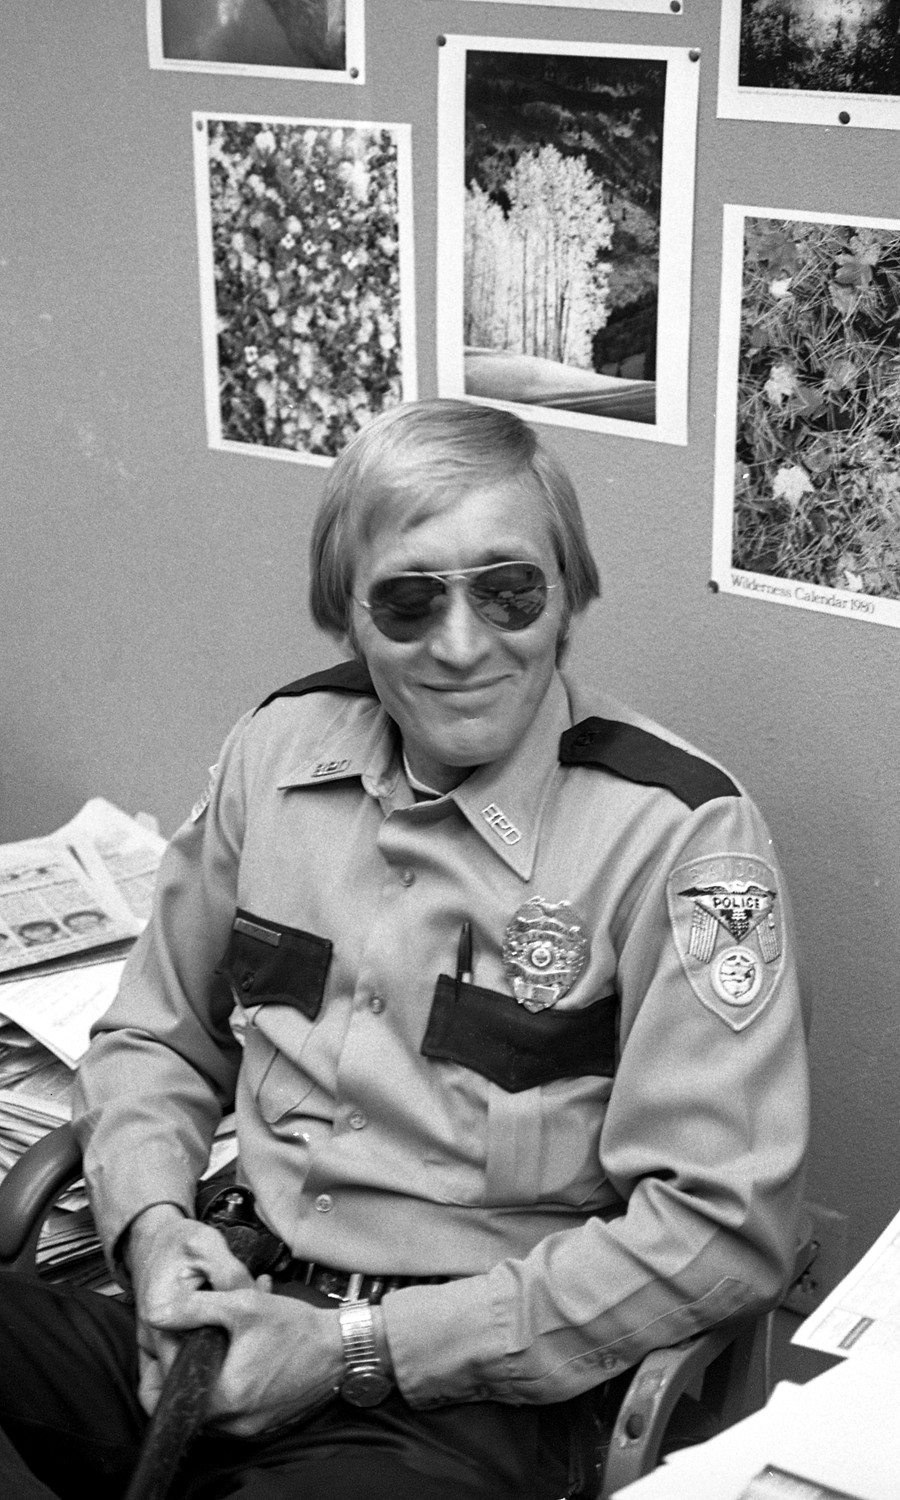 Bandon Police Officer Mike Trotter, 1980